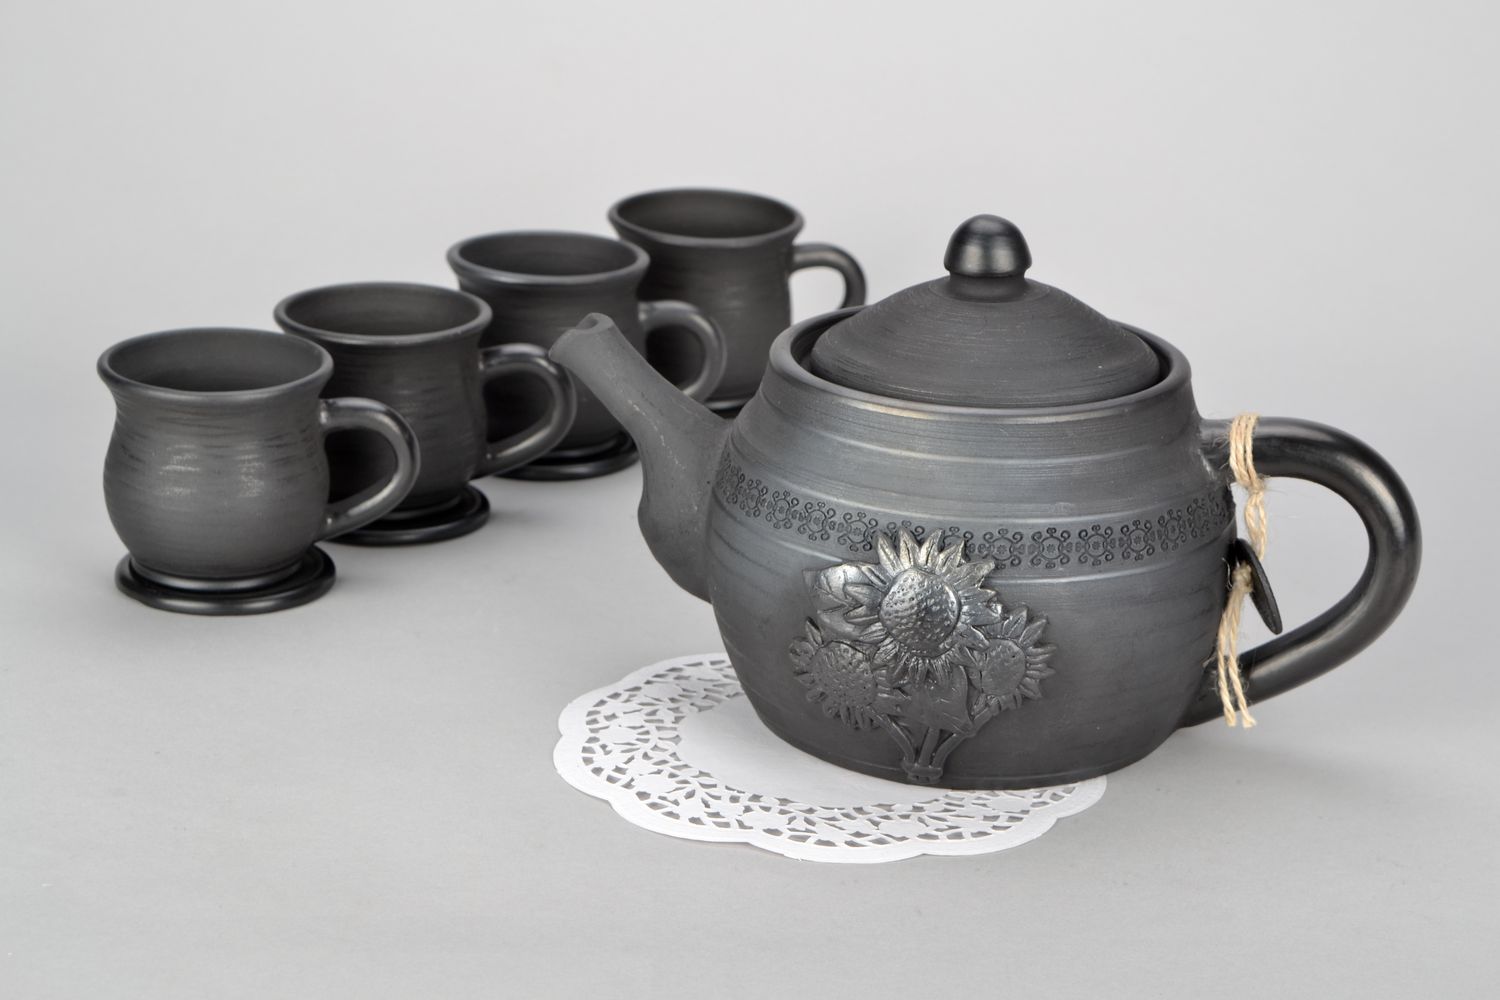 Clay teapot photo 1